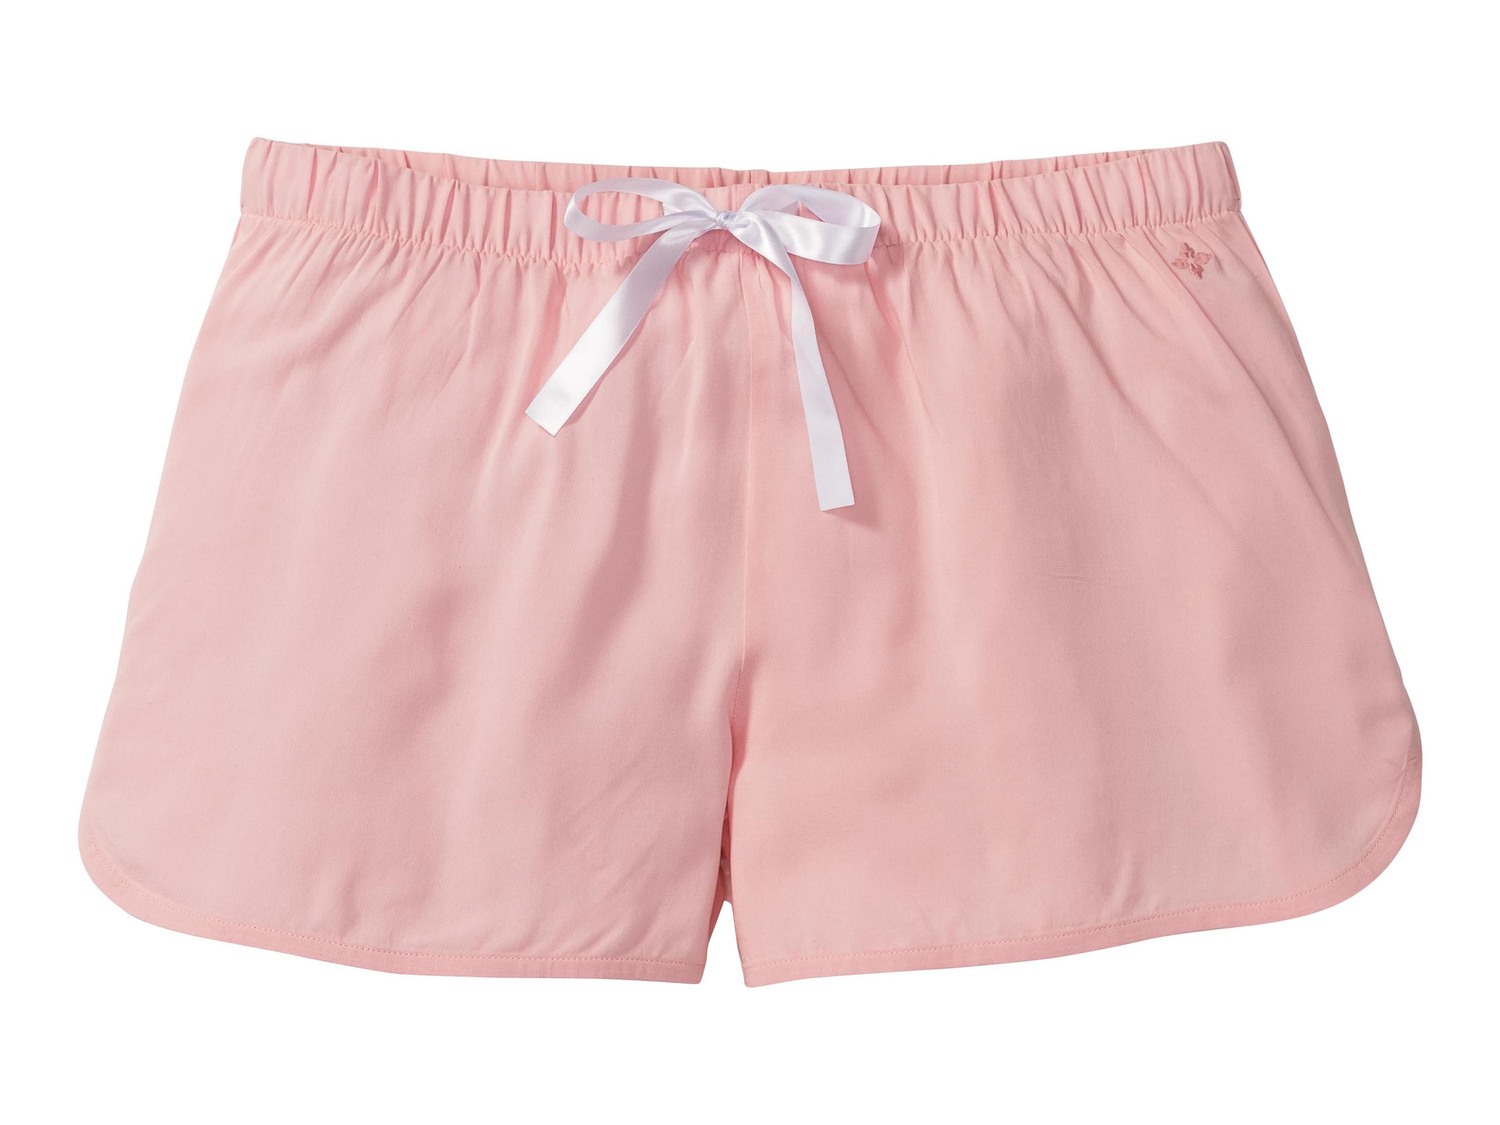 Shorts pigiama da donna Esmara Lingerie, prezzo 4.99 &#8364; 
Misure: S-L
- ...